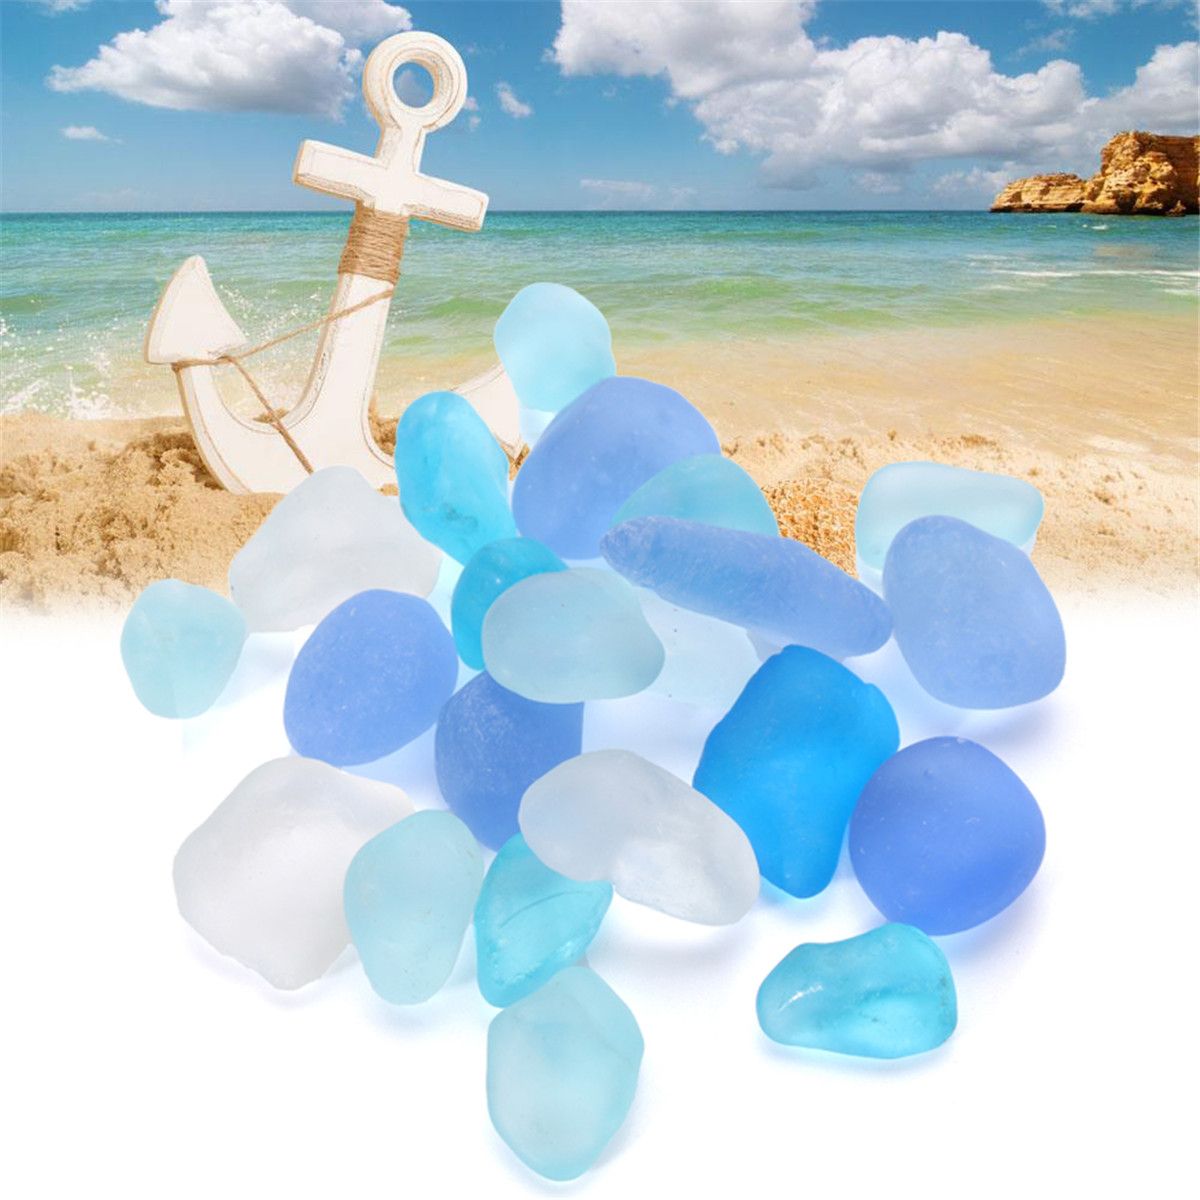 20Pcs-Sea-Beach-Glass-Beads-Jewelry-Vase-Aquarium-Fish-Tank-Decorations-Craft-10-16mm-1279318